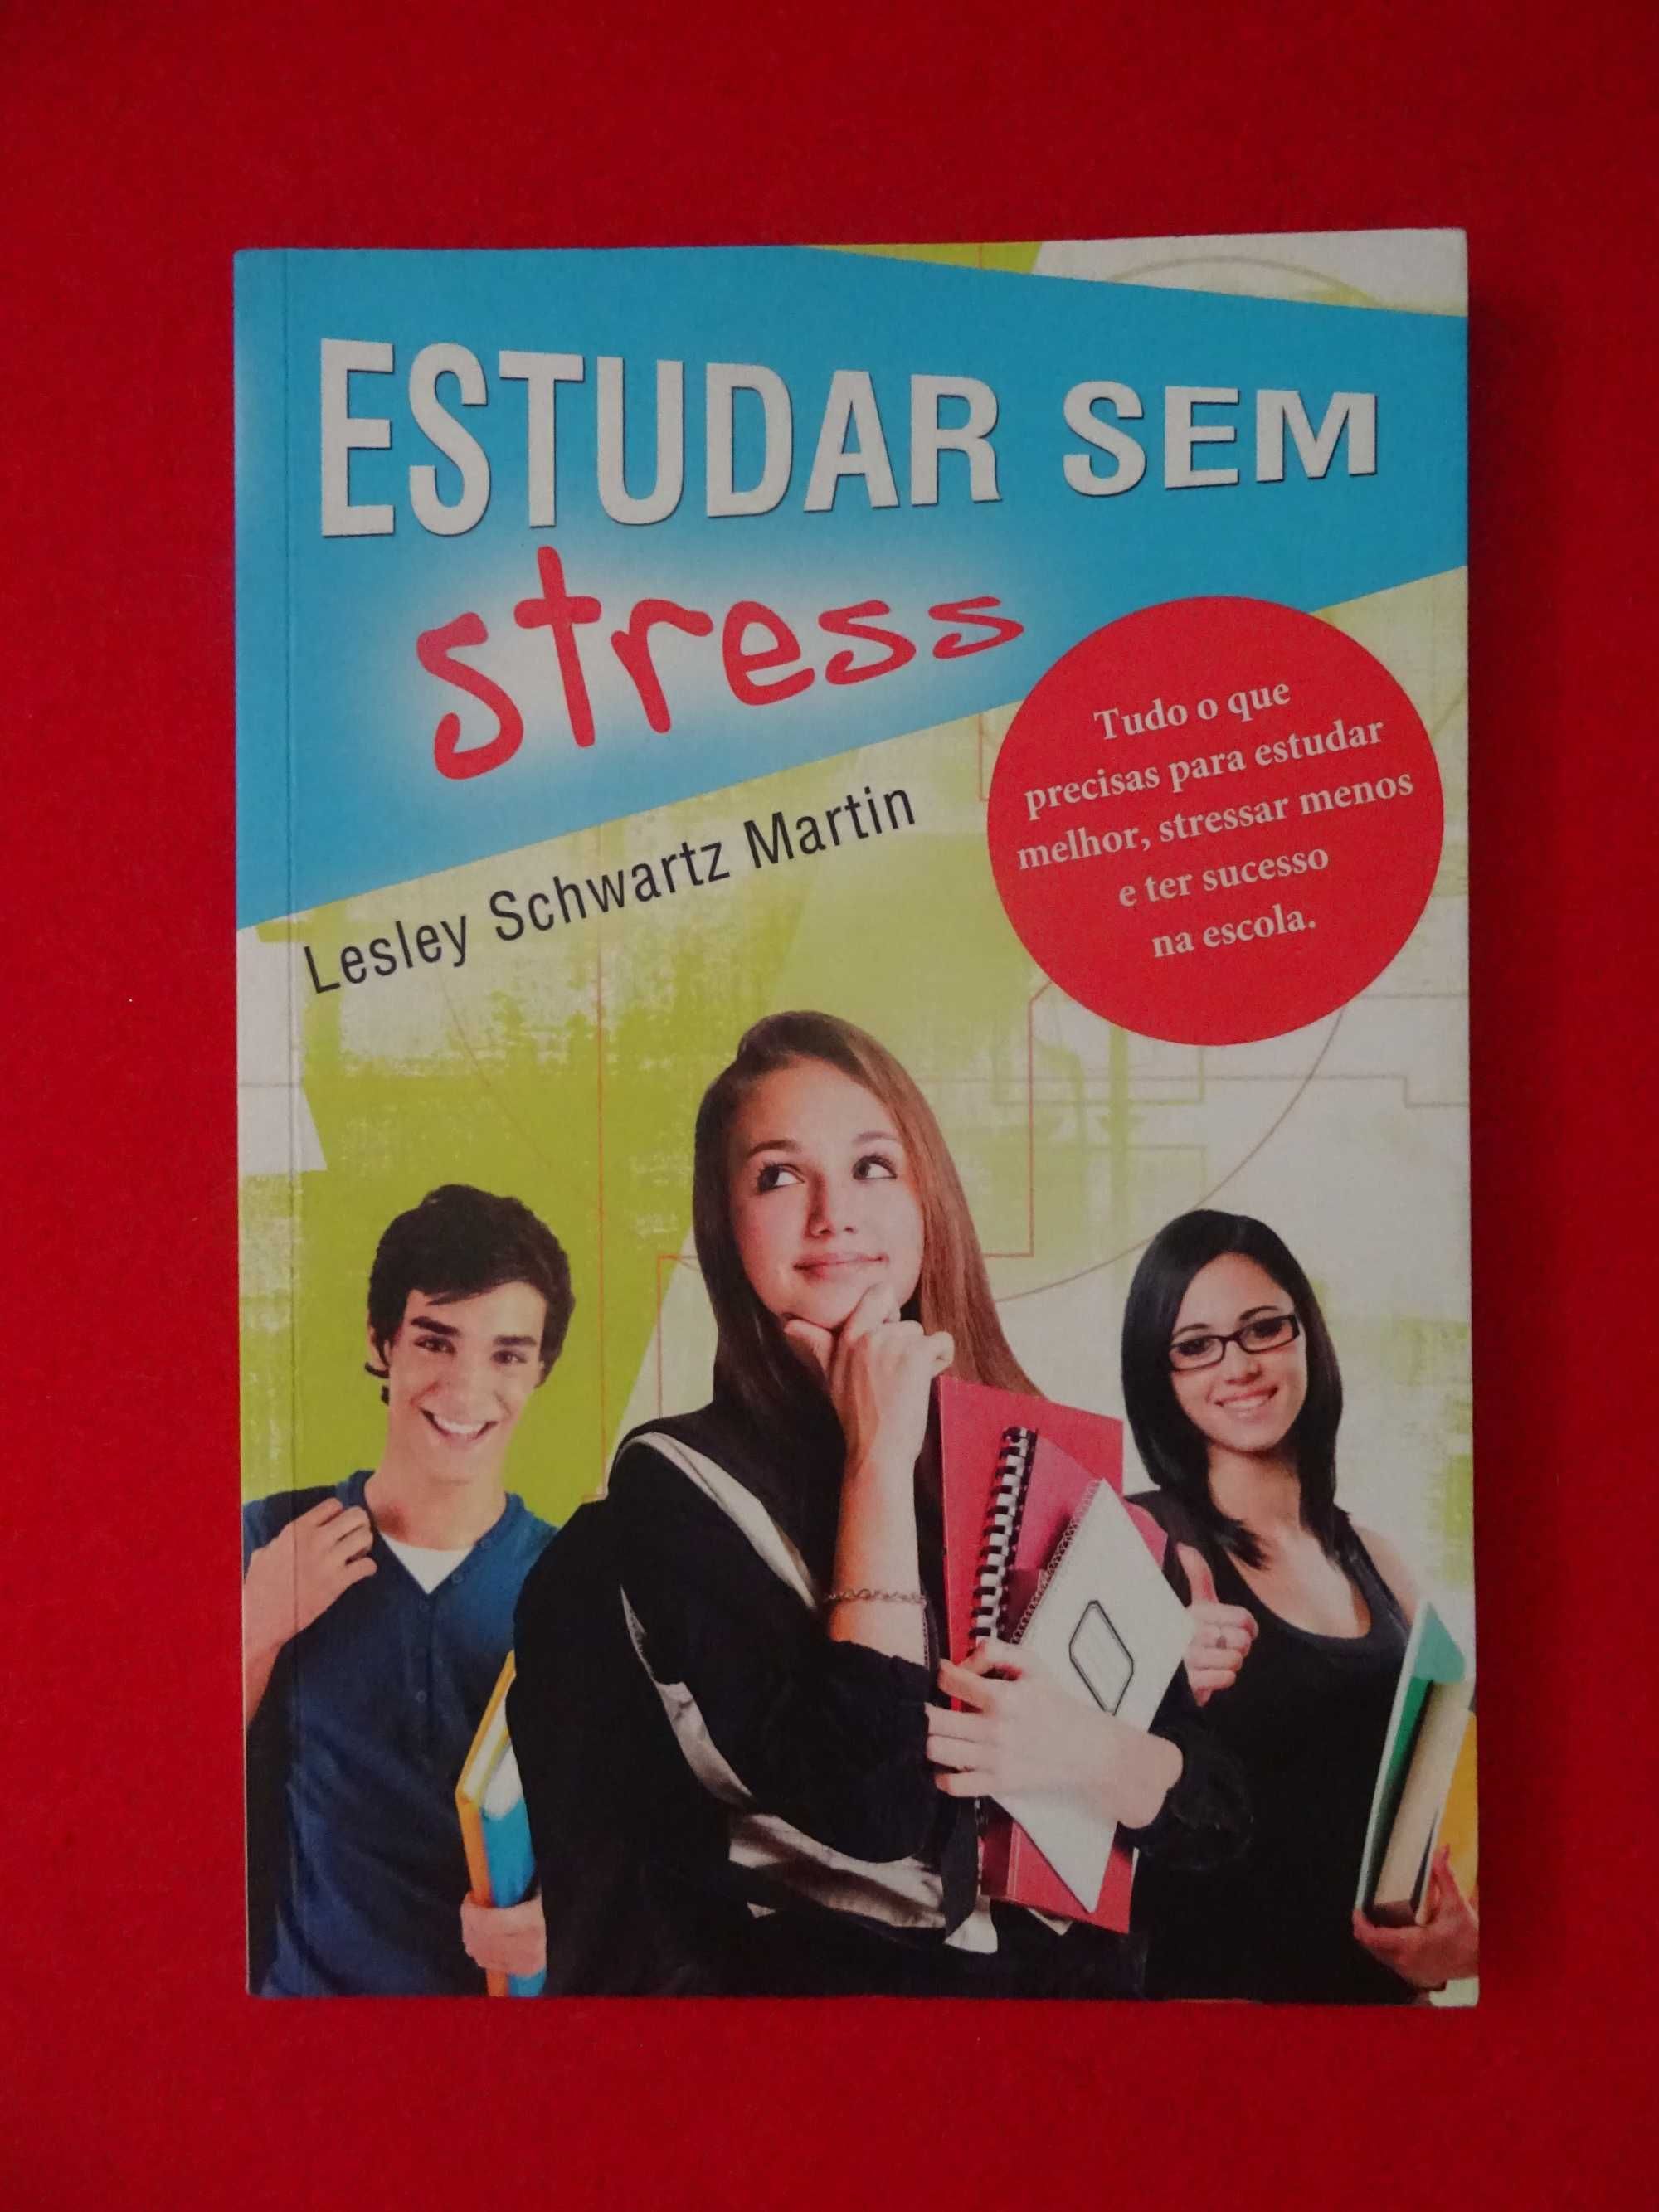 Estudar sem stress -  Lesley Schwartz Martin